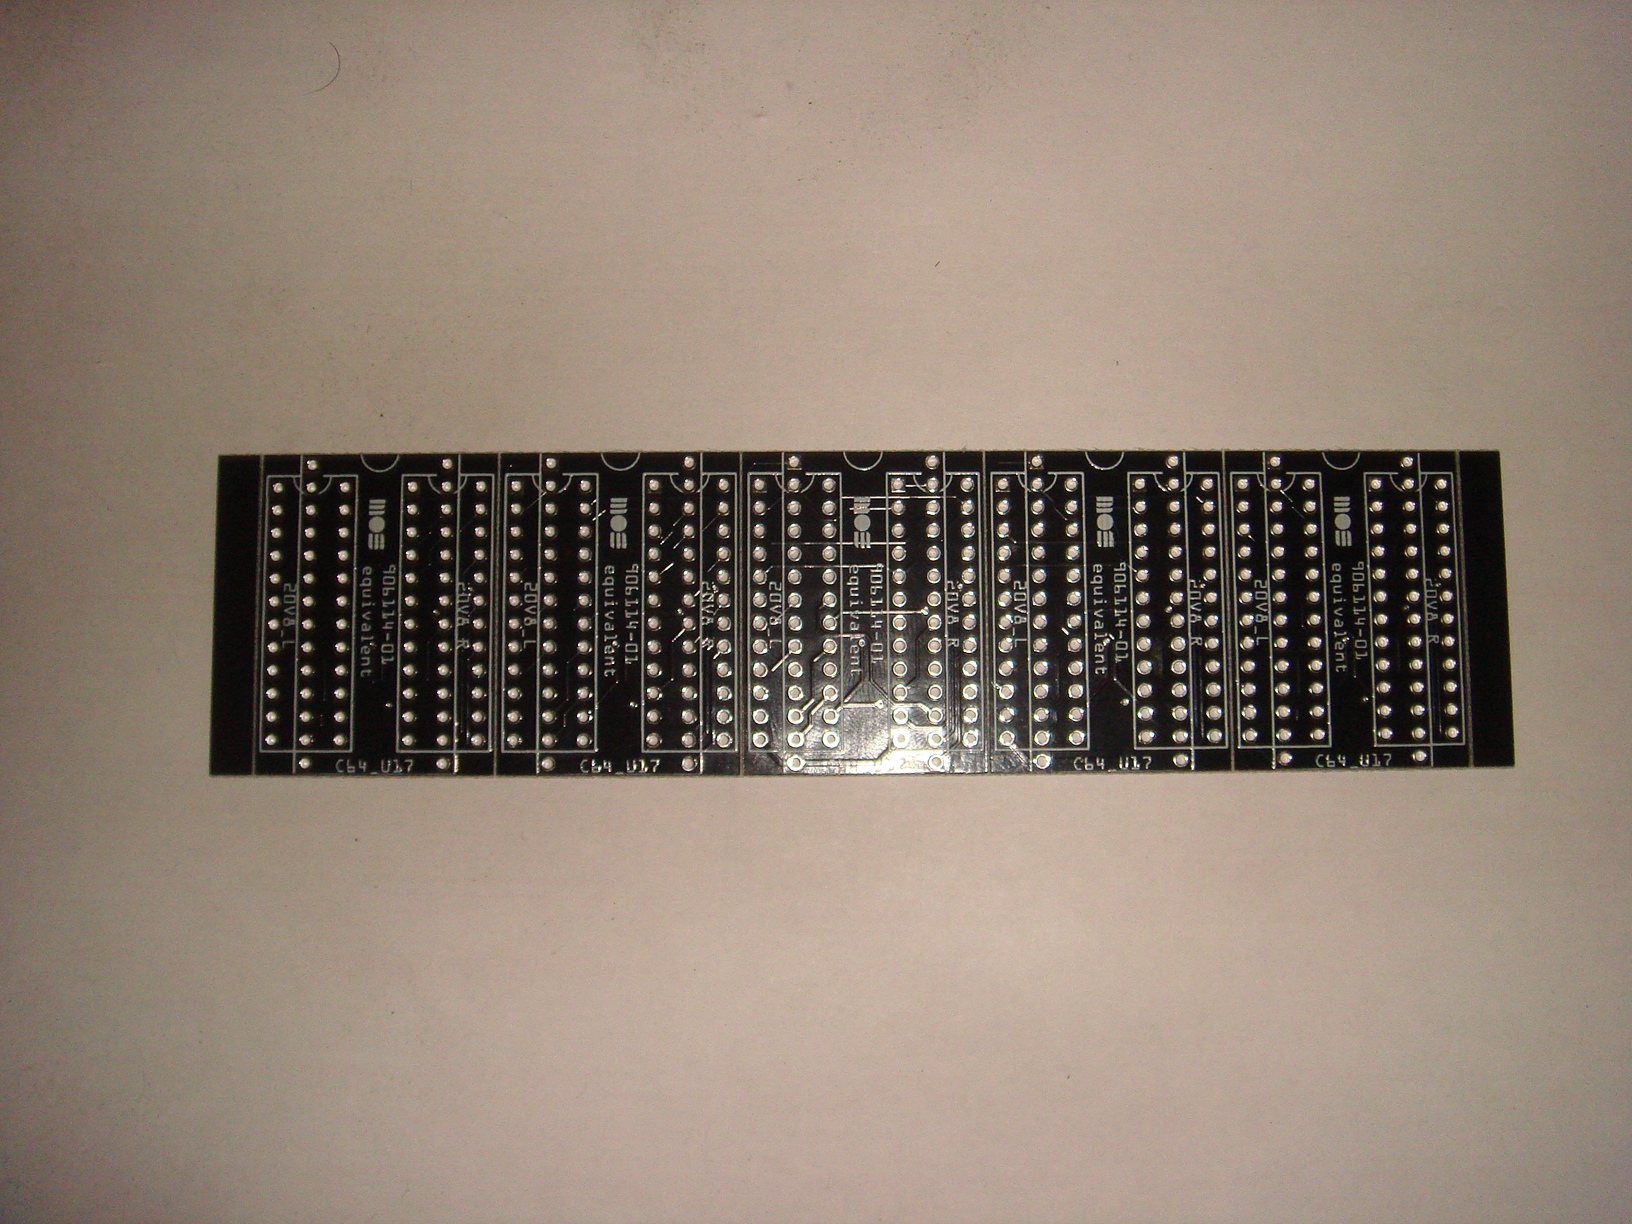 uPLA ROUND PIN HEADER  V3.0 PROMO NEW PLA 906114-01 C64 82S100 Commodore 64 